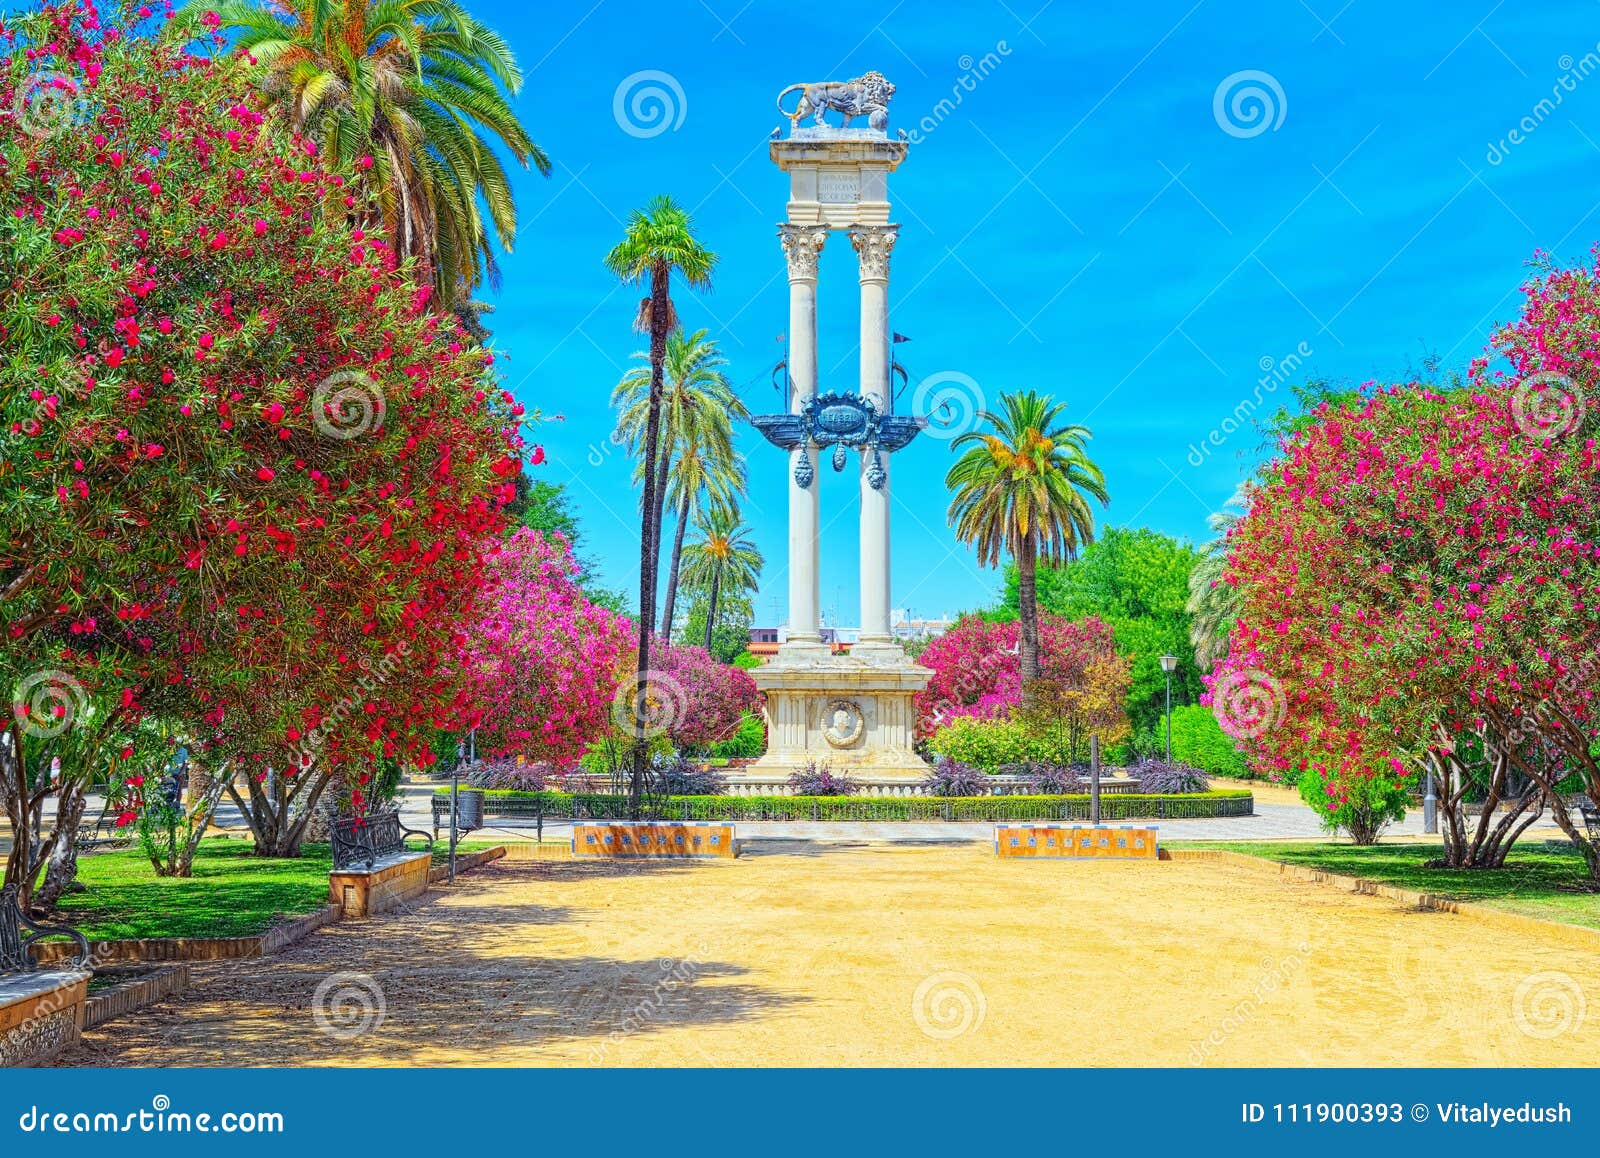 beautiful park in the center of seville - prado de san sebastian